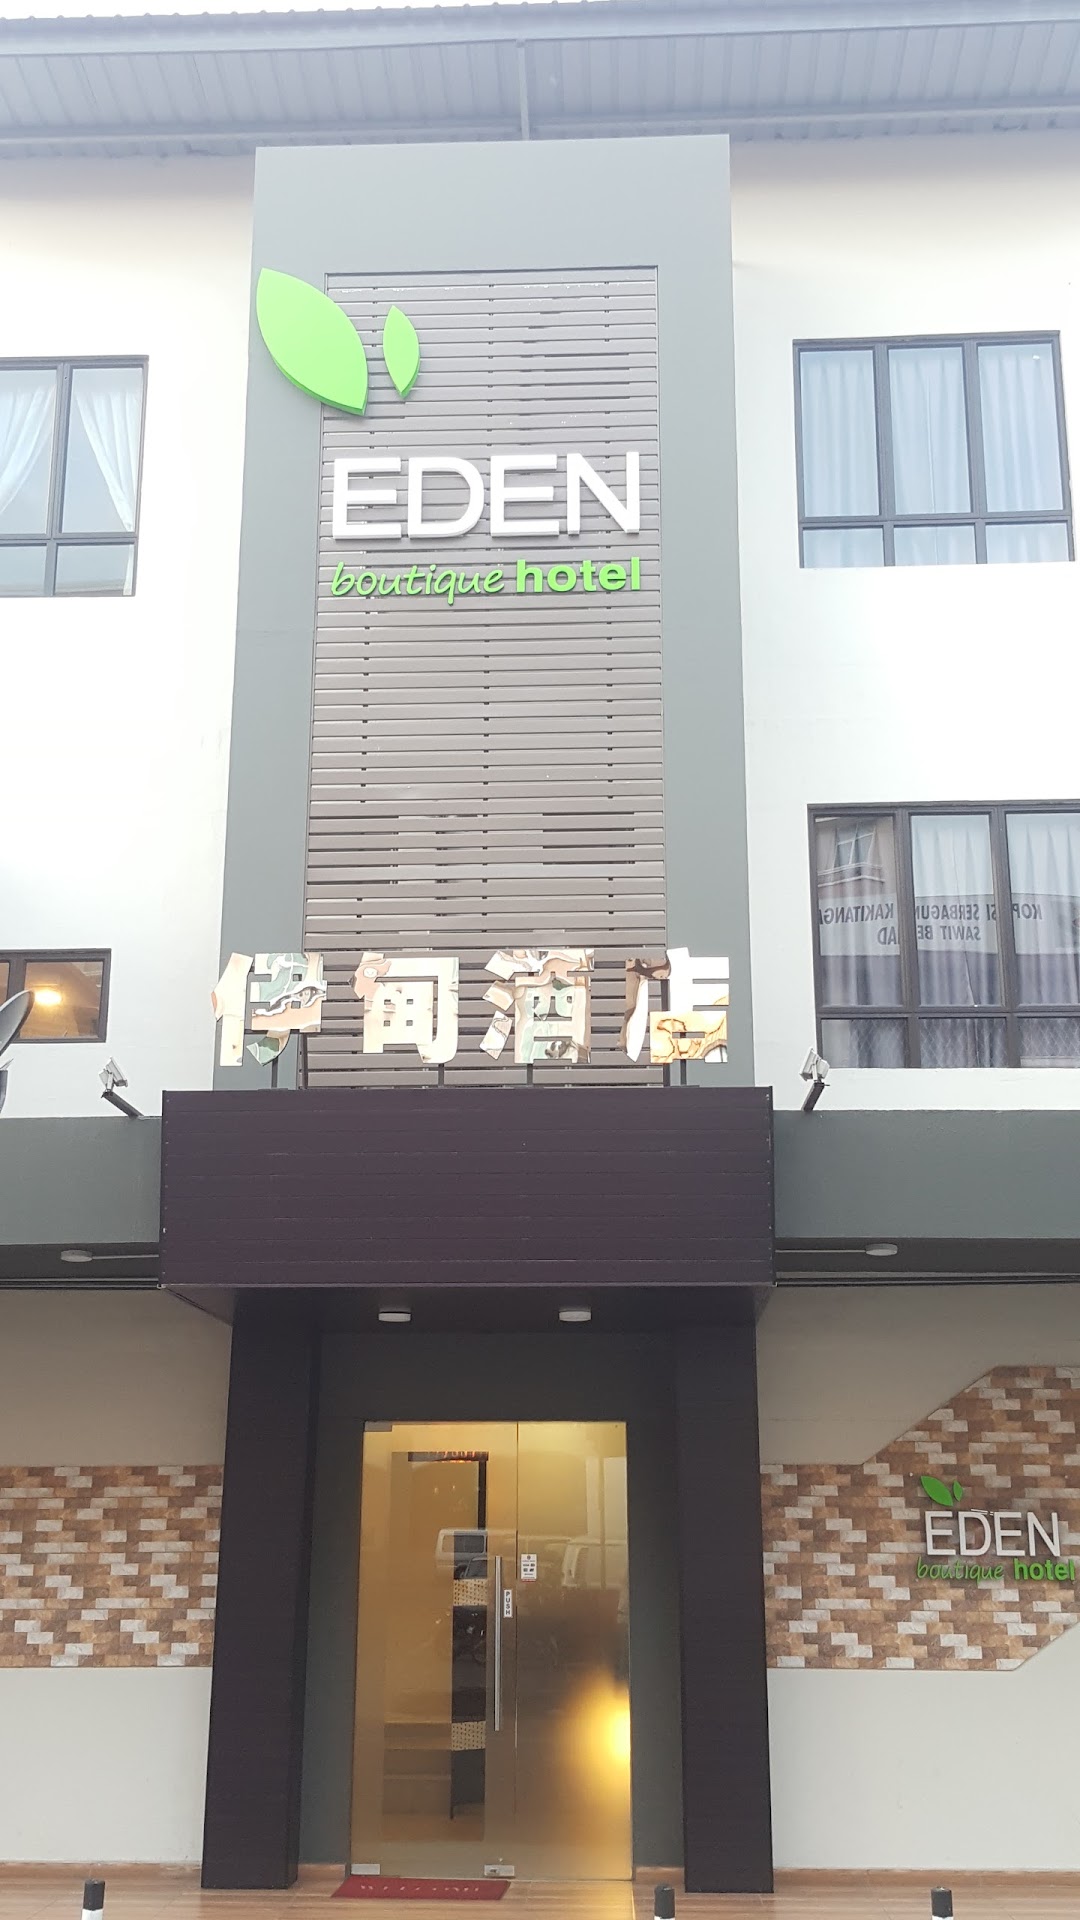 Eden Boutique Hotel